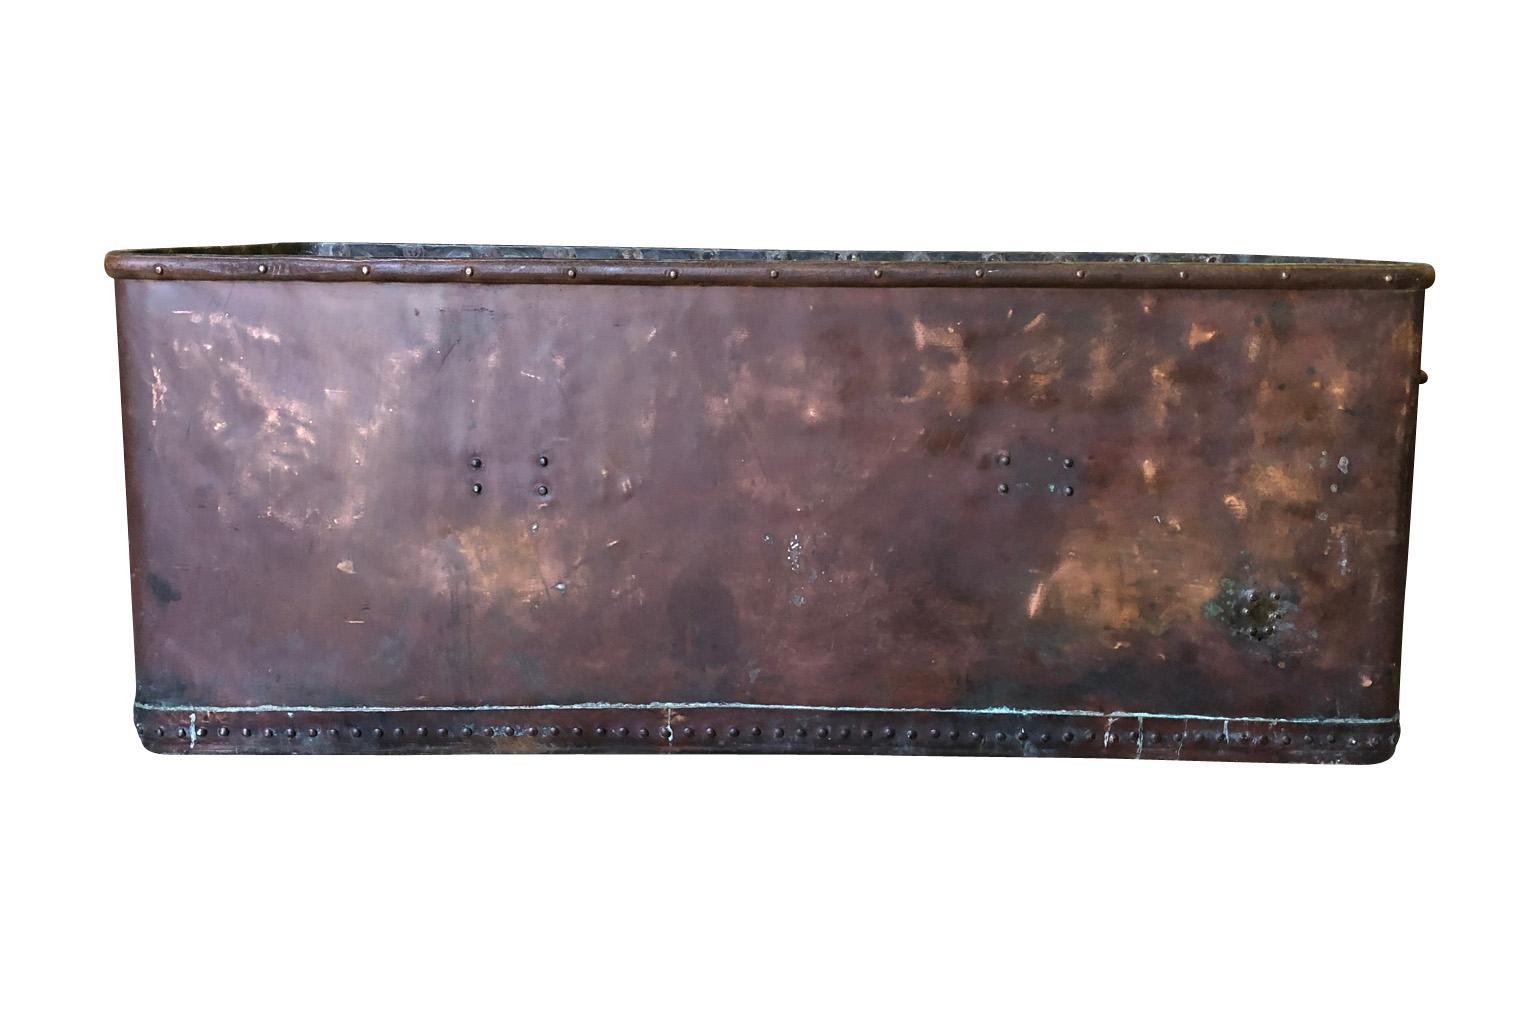 French 19th Century Copper Trough - Tub In Good Condition For Sale In Atlanta, GA